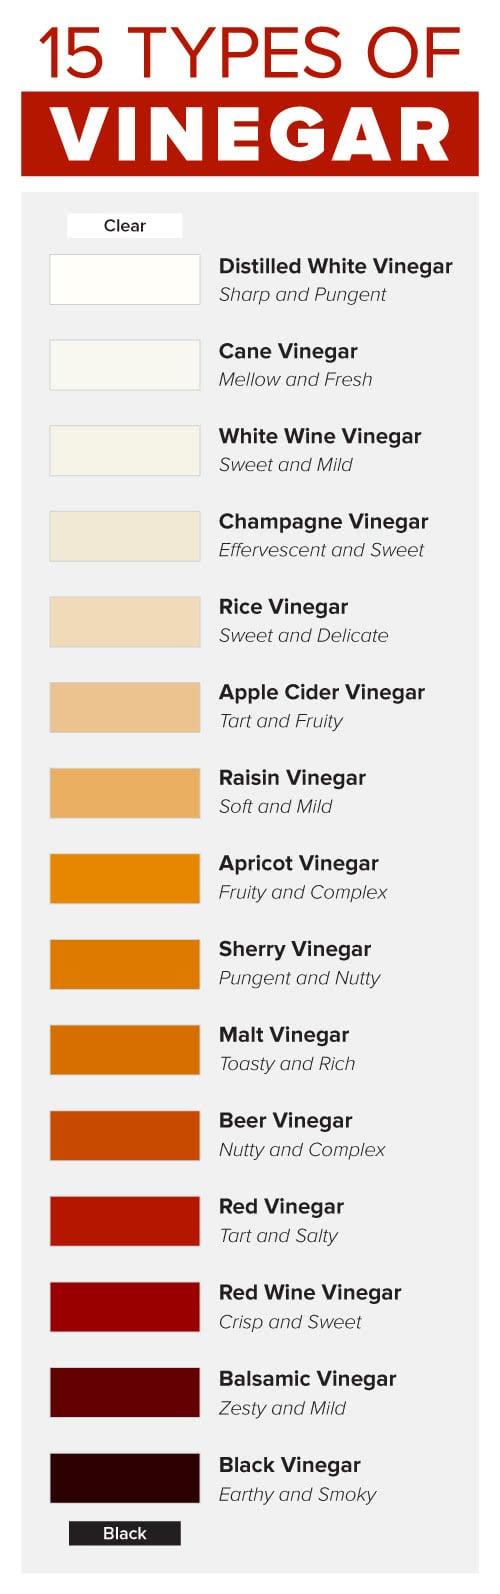 15 Types of Vinegar infographic